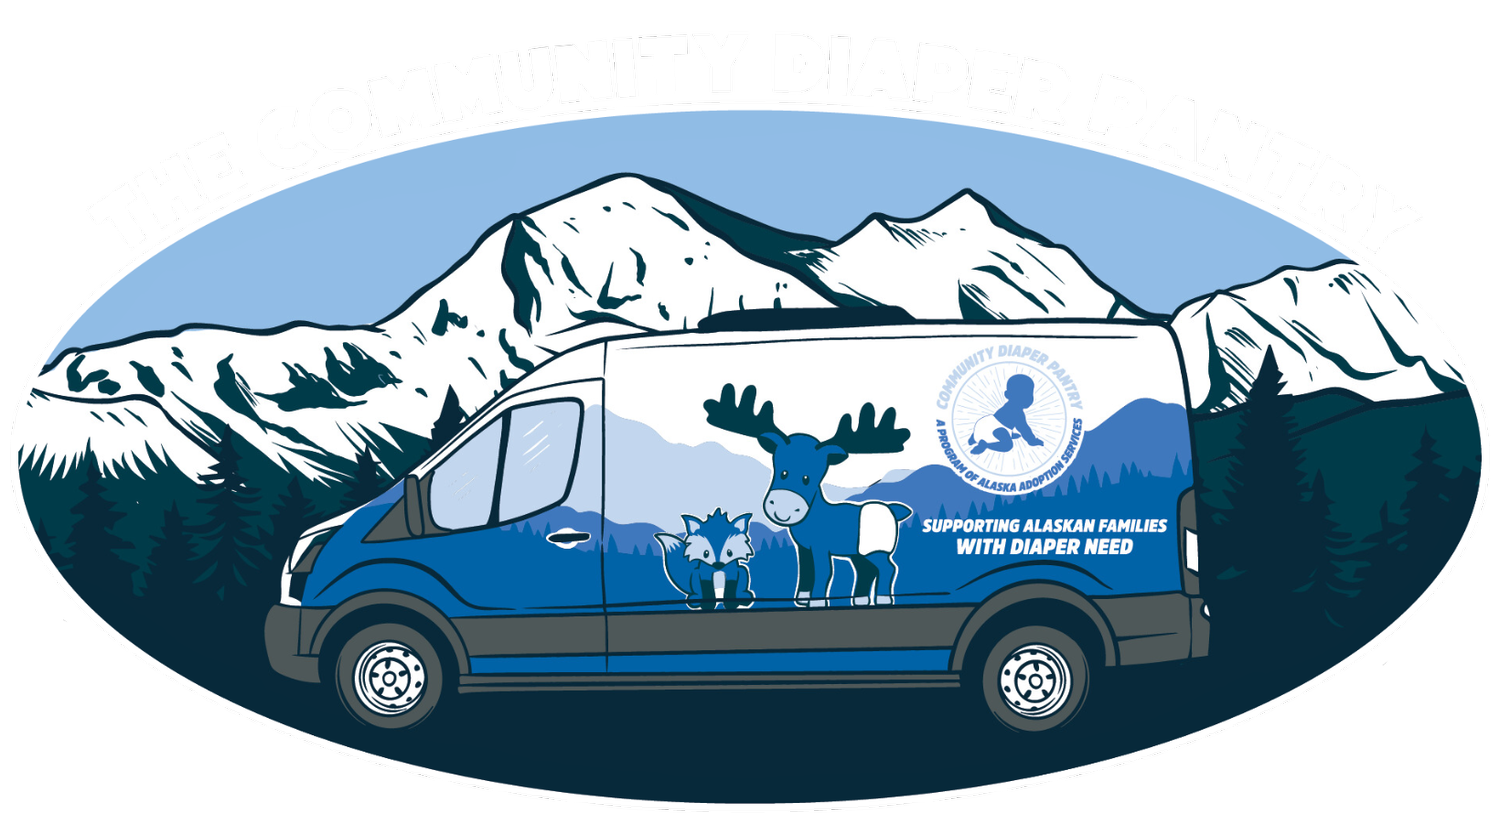 The Community Diaper Pantry